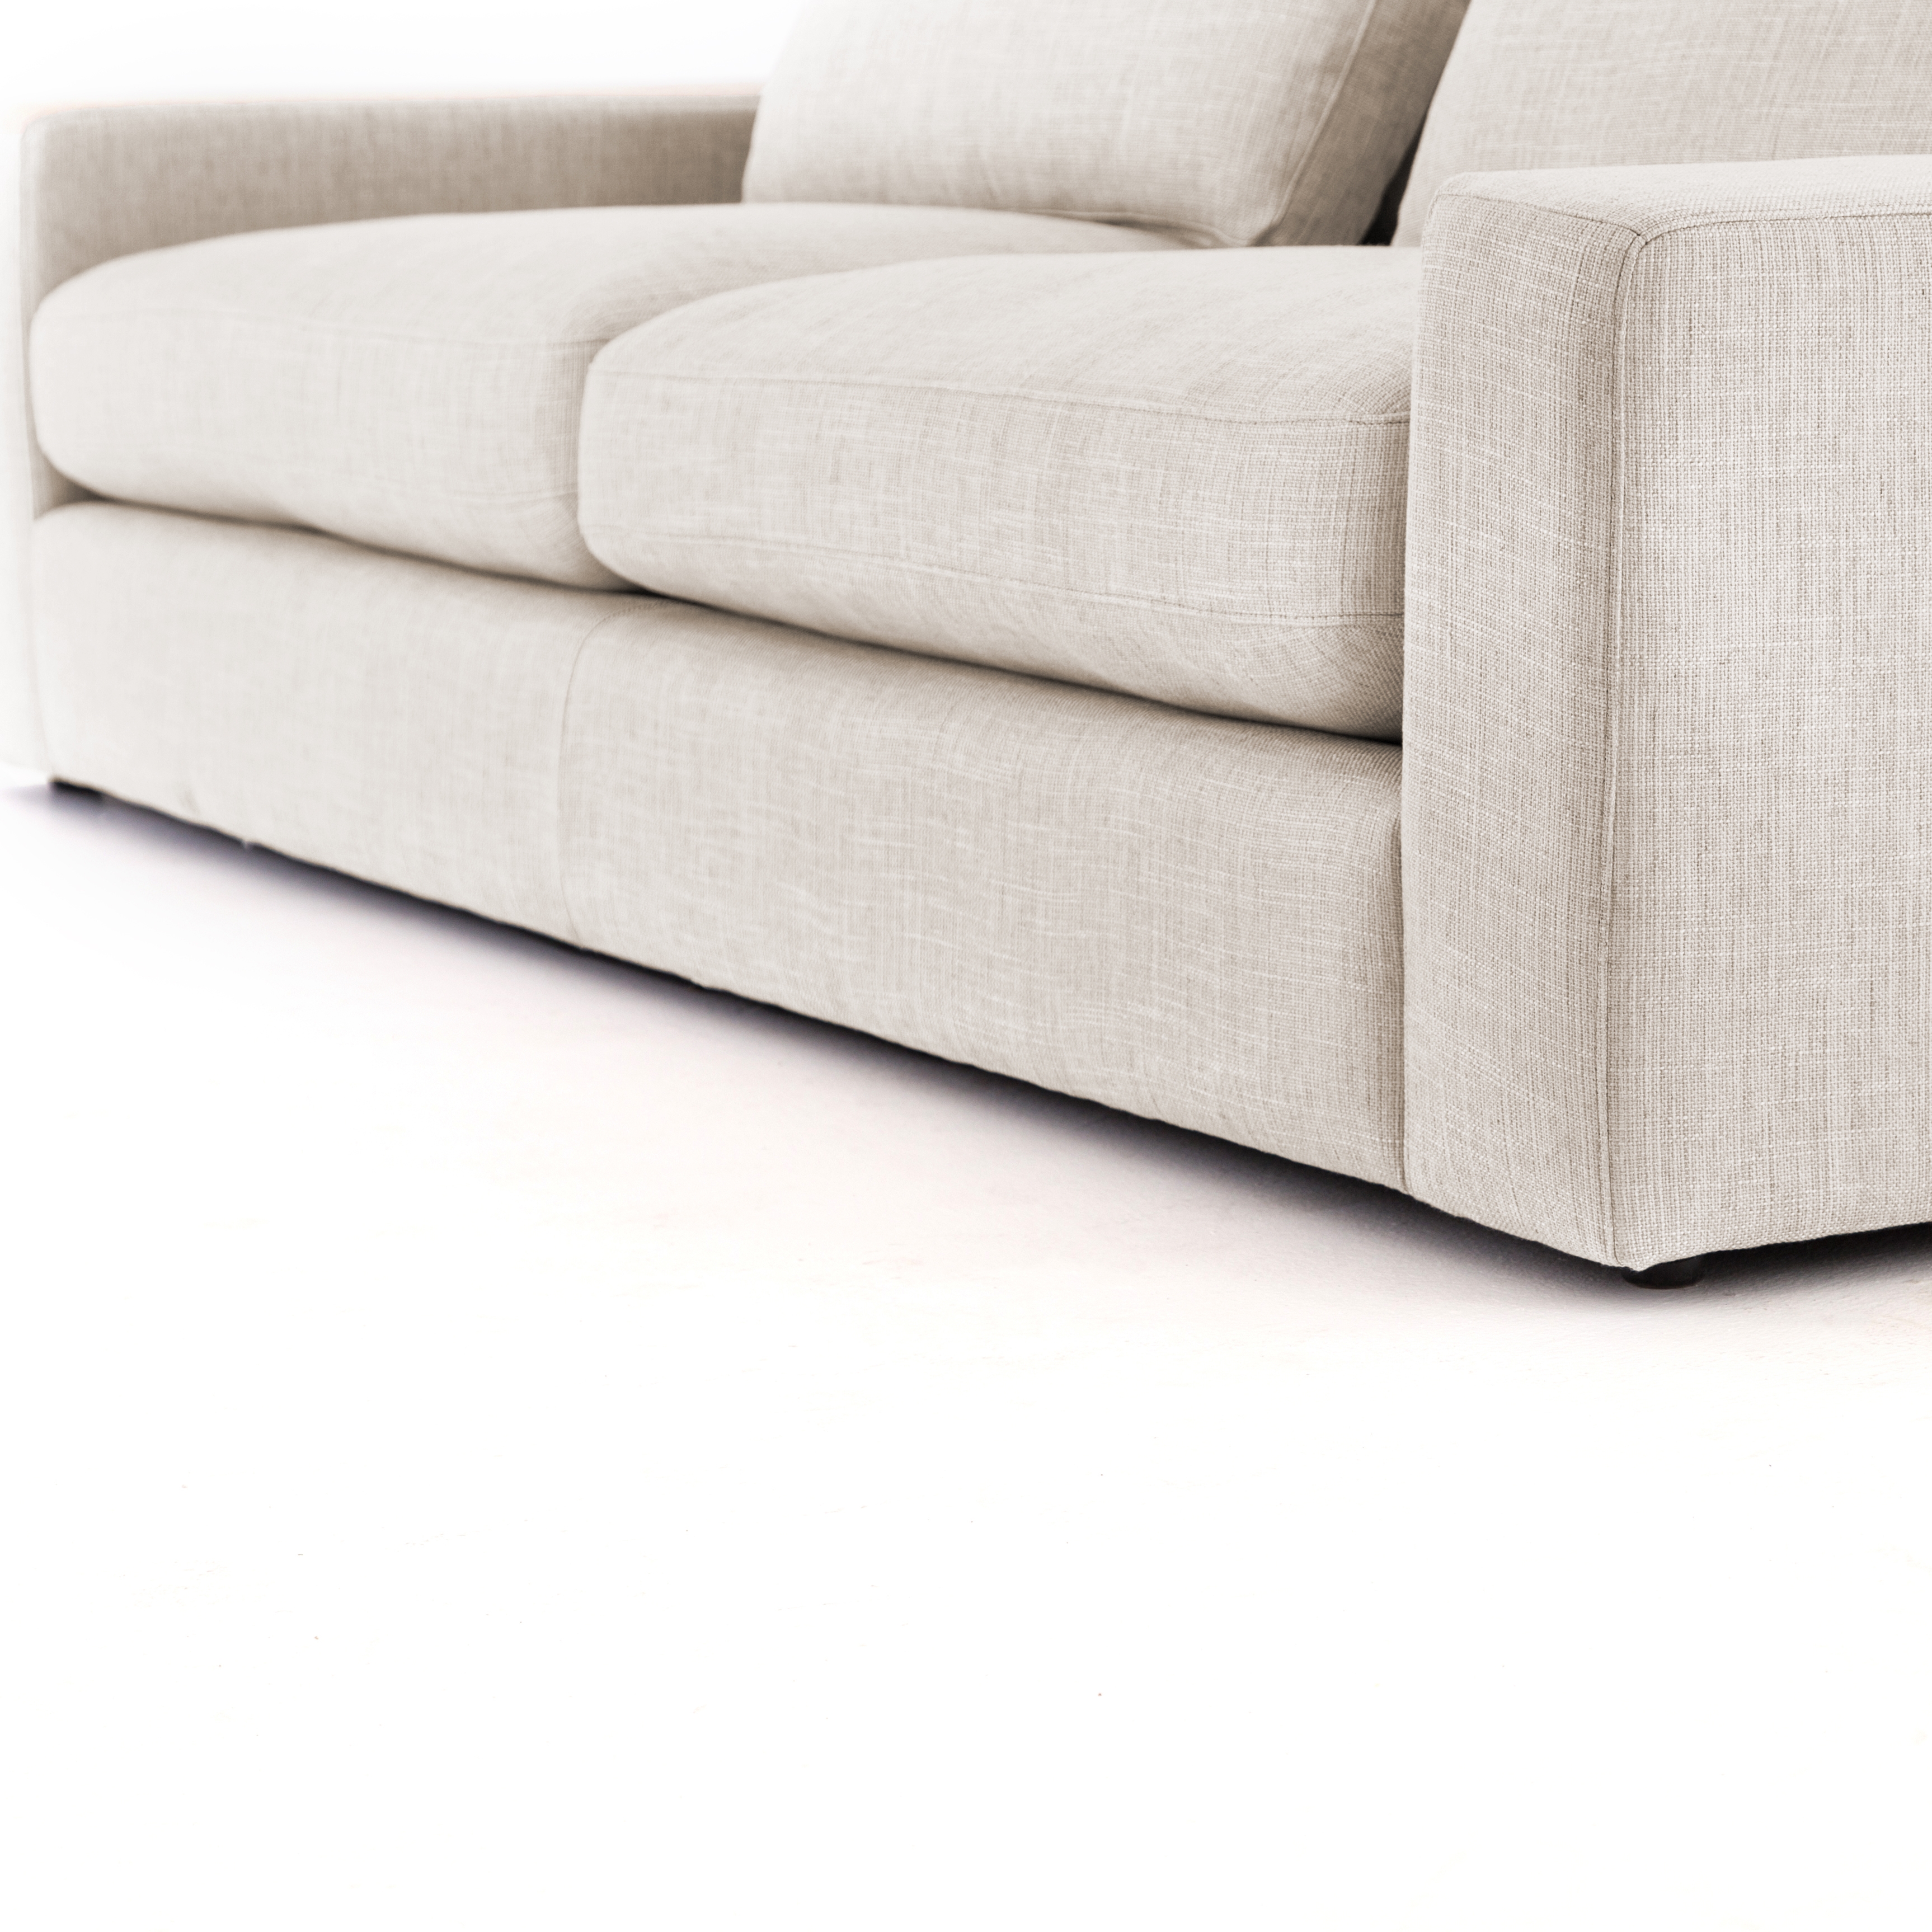 Bloor Sofa-98"-Essence Natural - Image 3